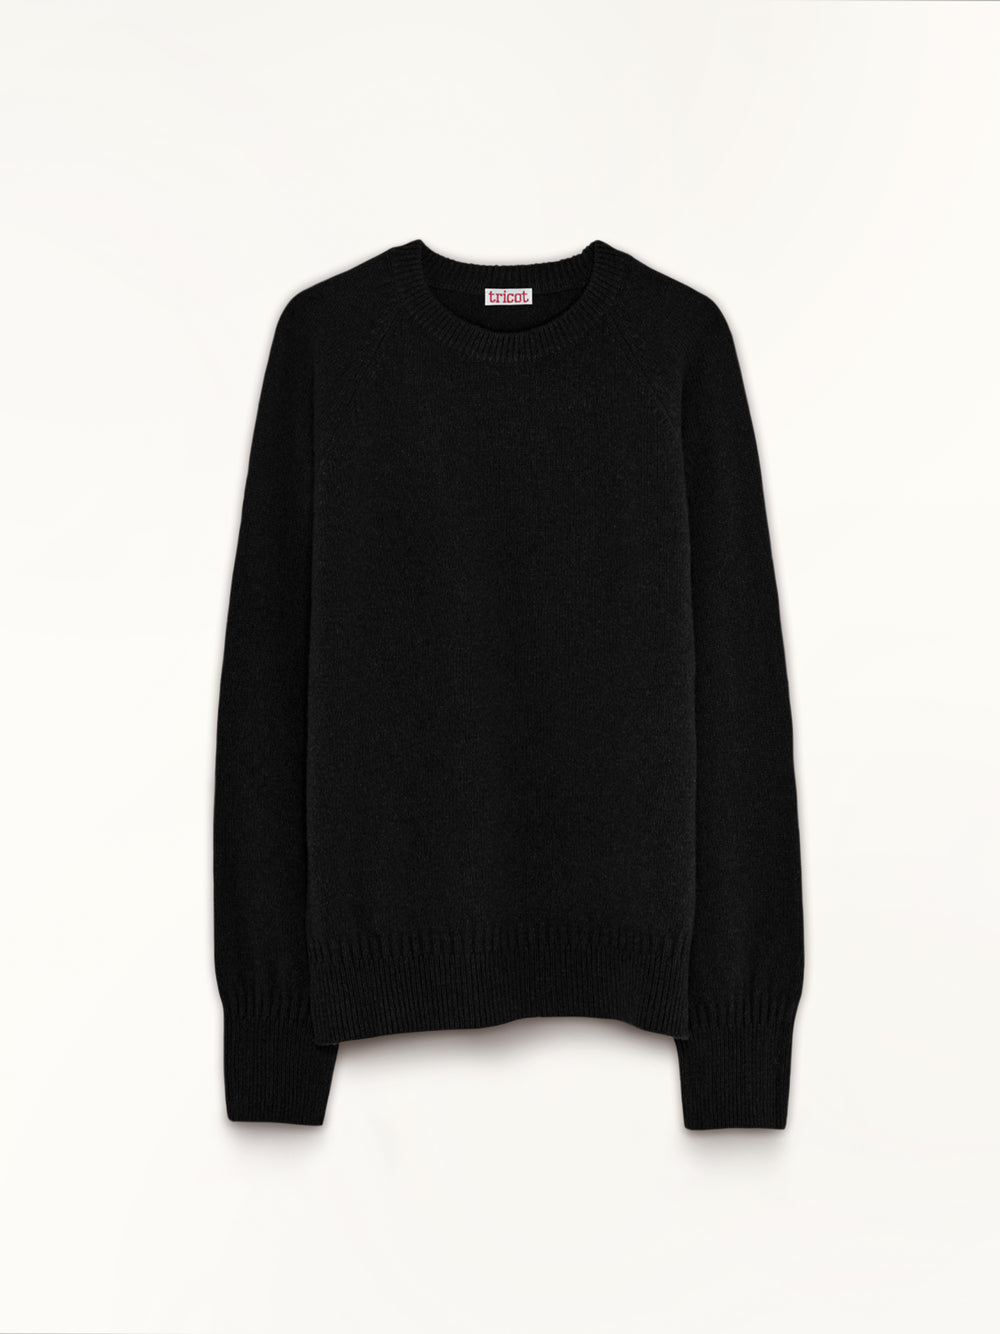 Women's cashmere crewneck sweater in Black